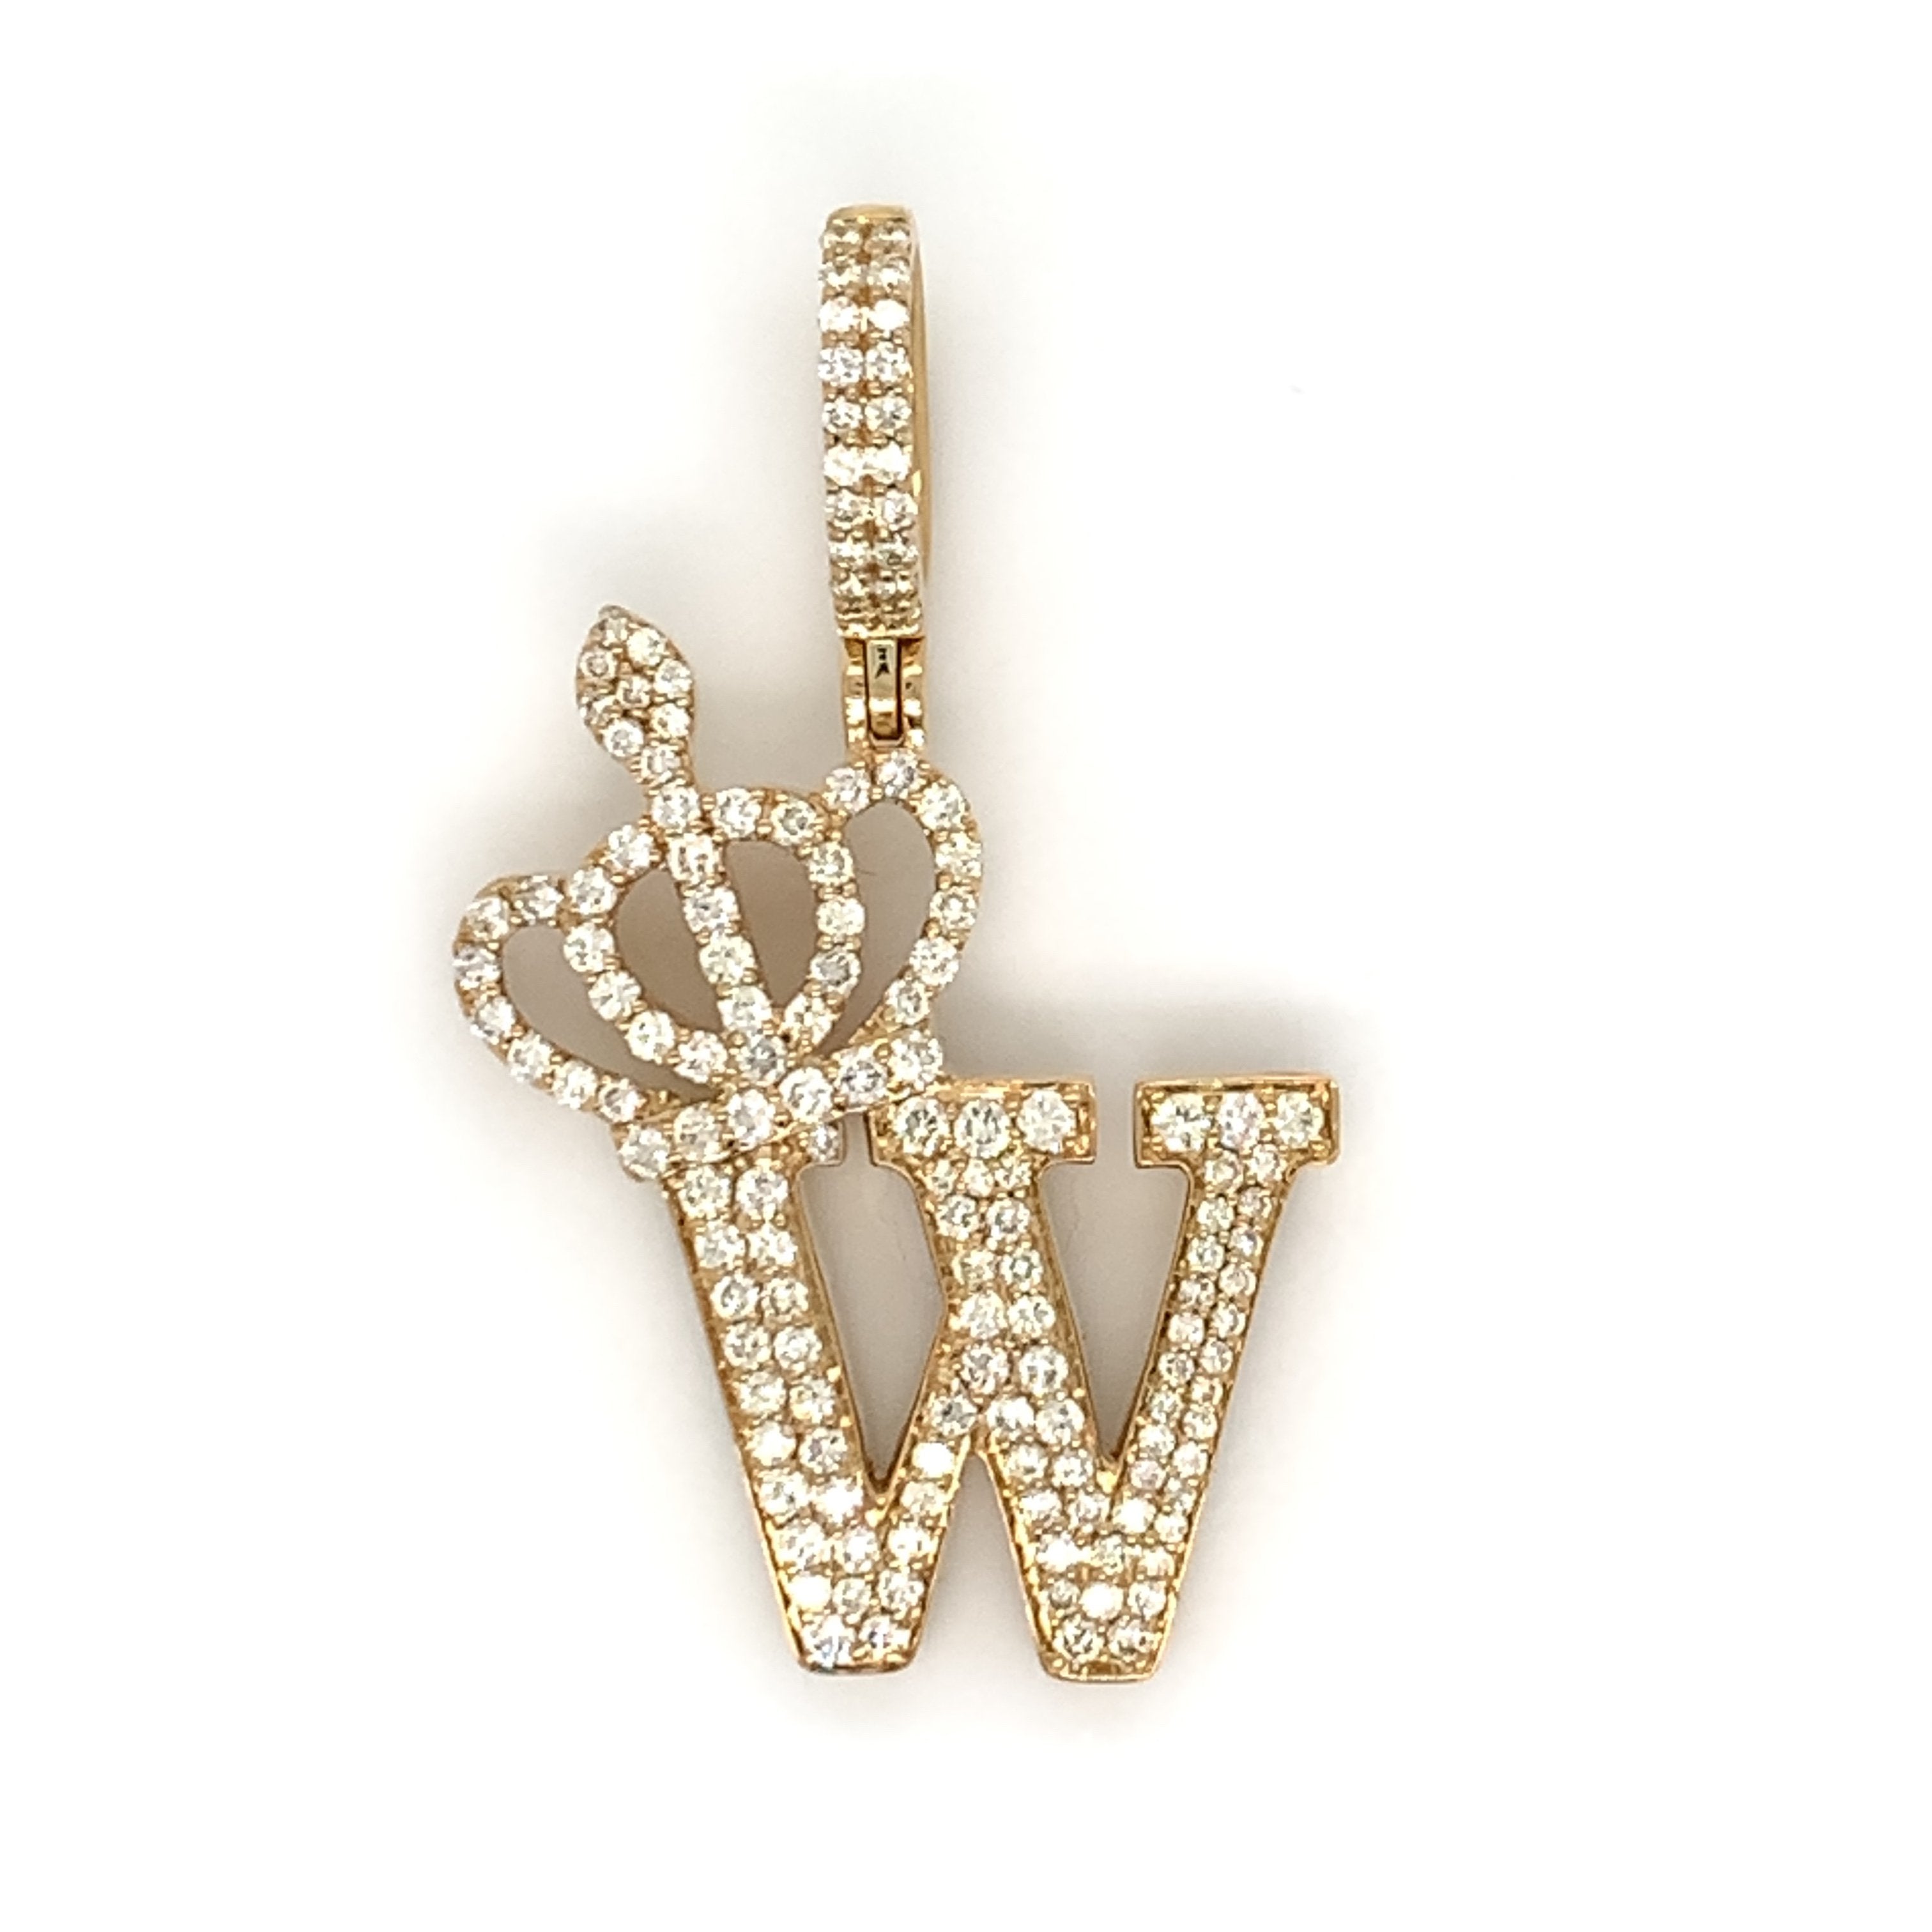 1.30 CT. Diamond Initial "W" Pendant in 10K Gold - White Carat - USA & Canada